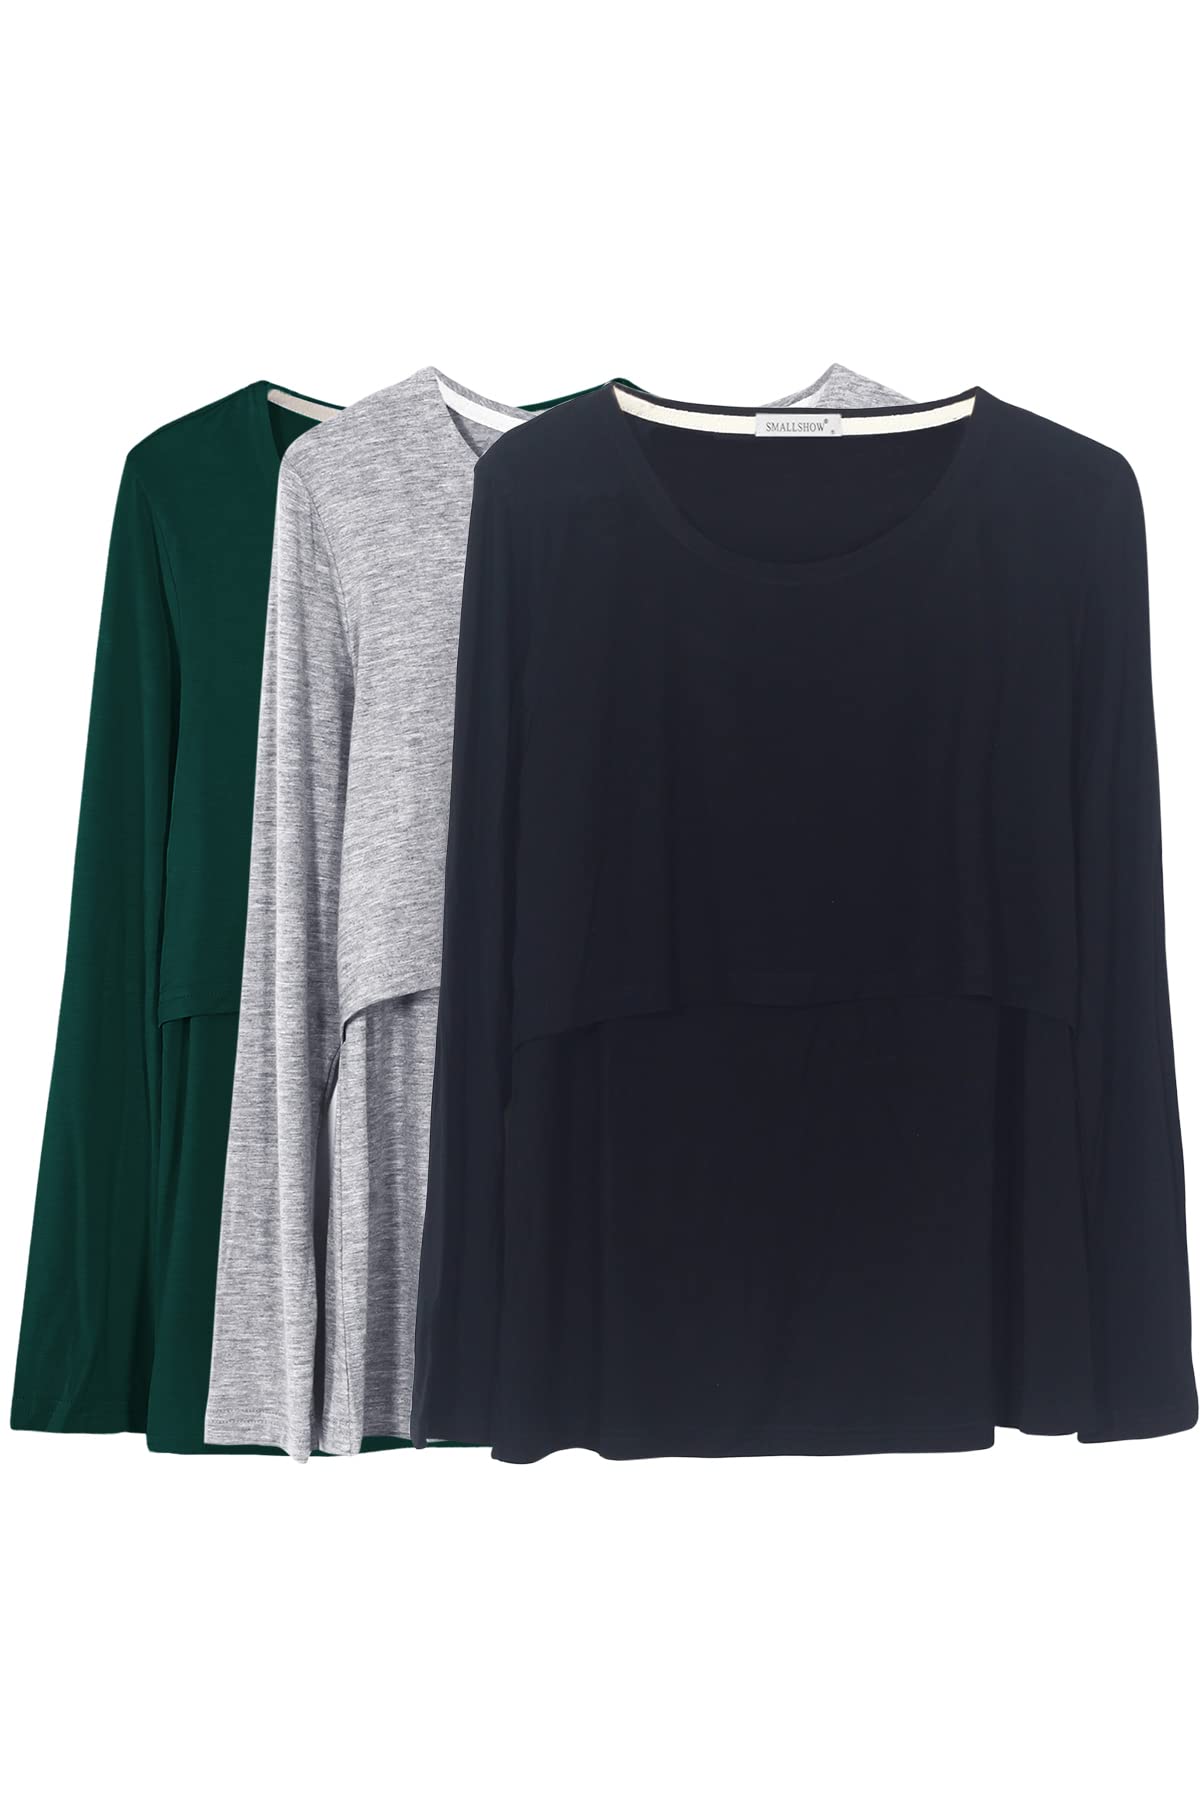 Smallshow Damen Stillshirt Langarm Umstandsshirt 3er Pack,Black/Grey/Deep Green,M